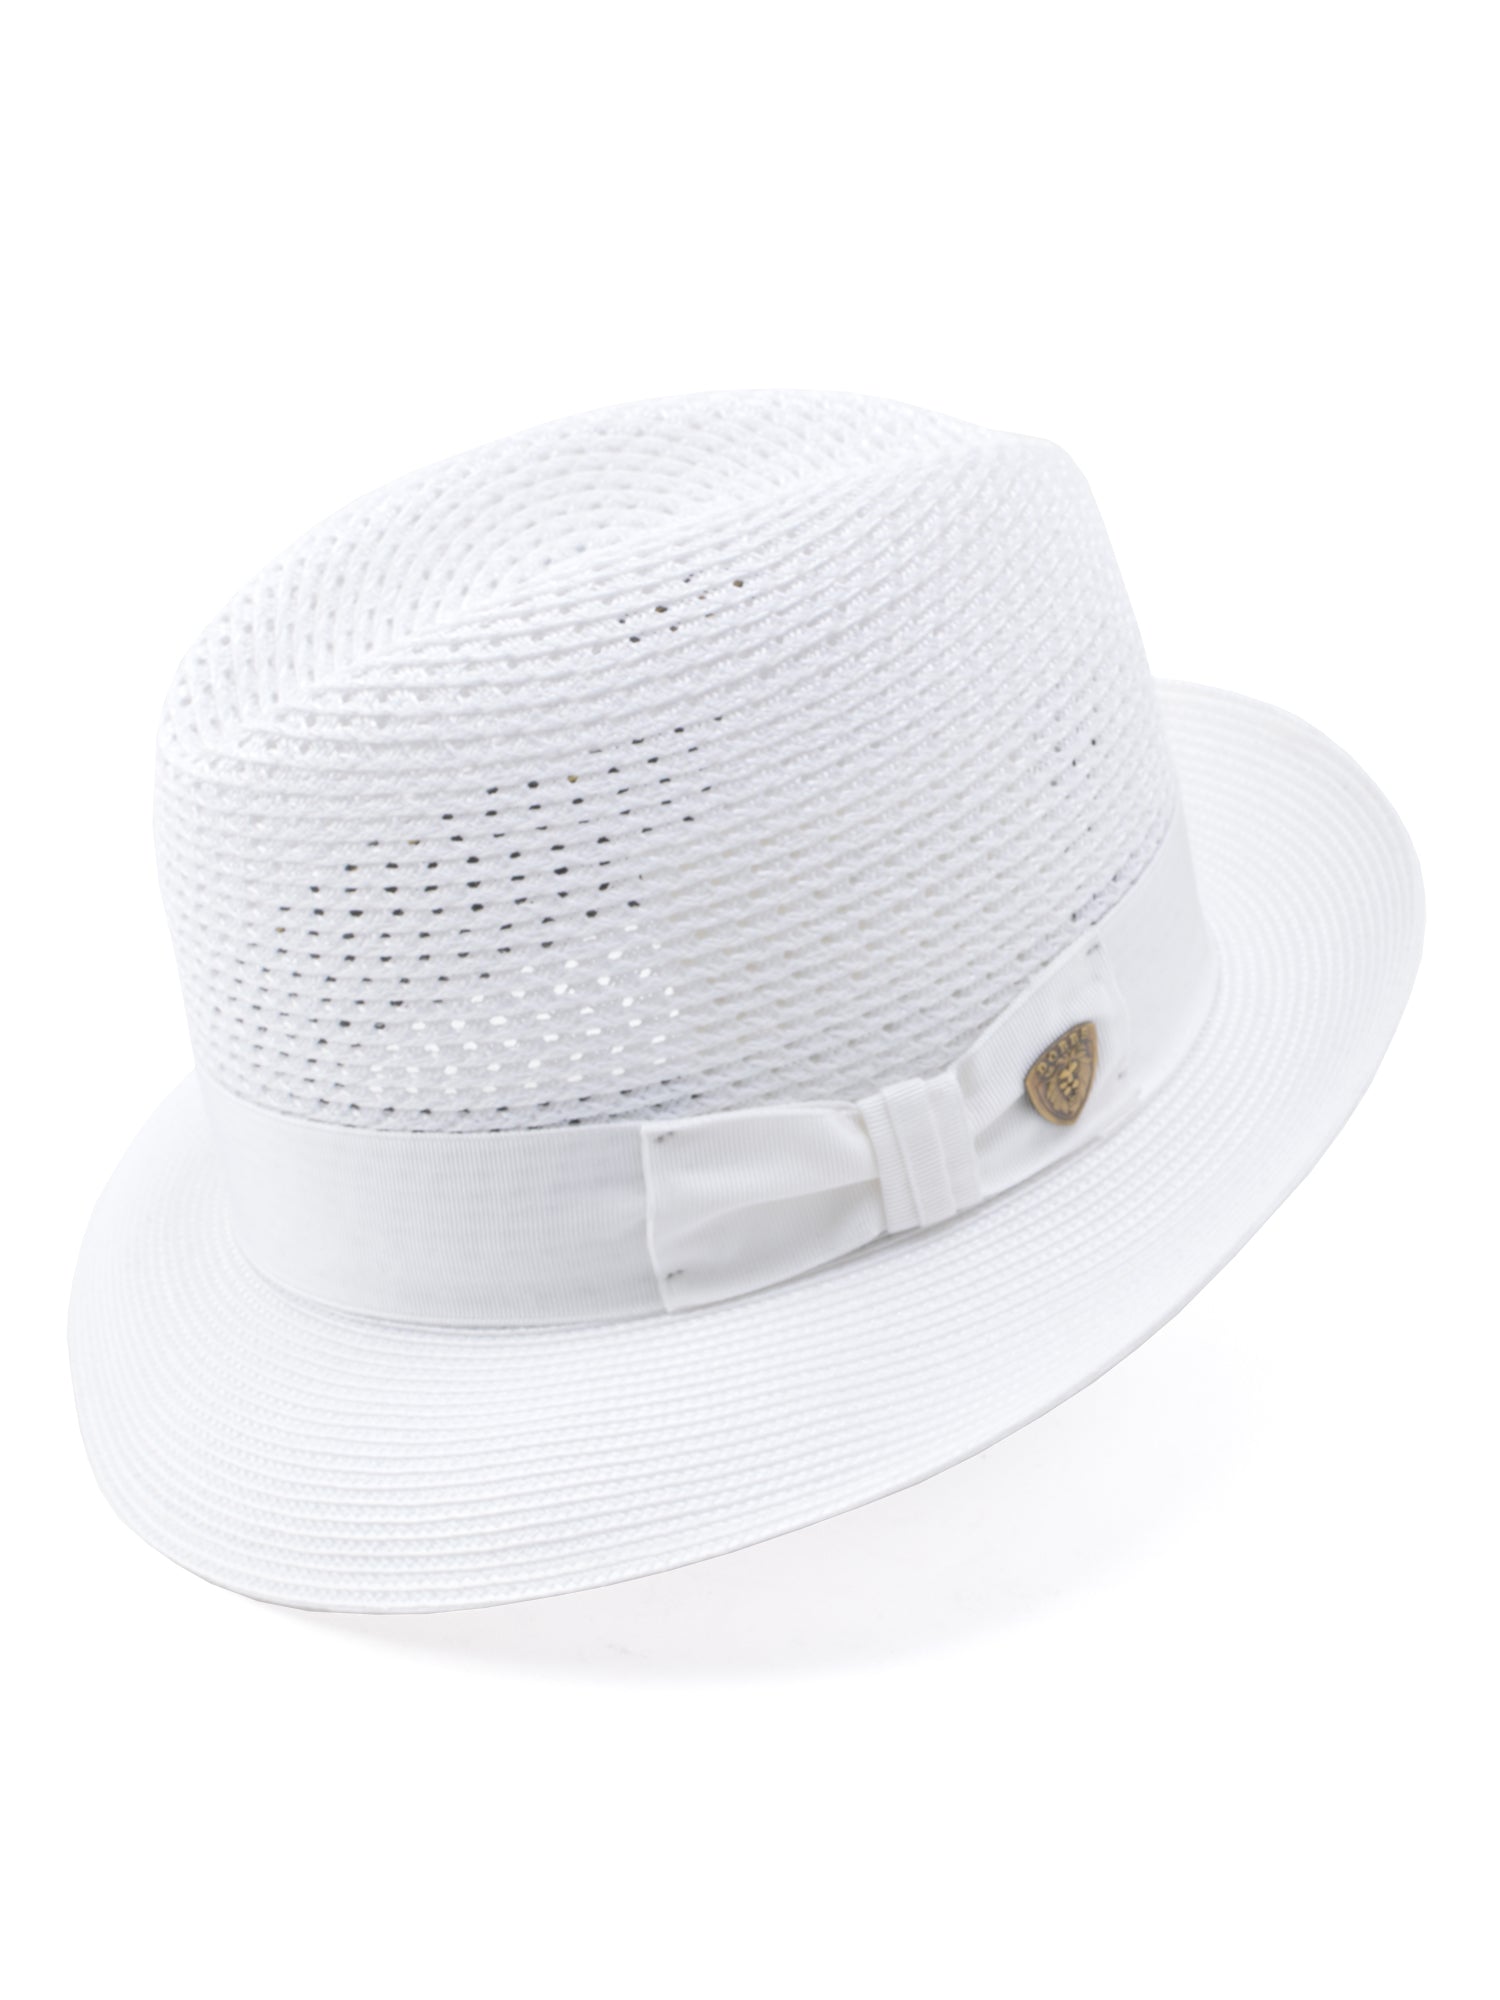 Dobbs Milan Vented Straw Madison Hat in White